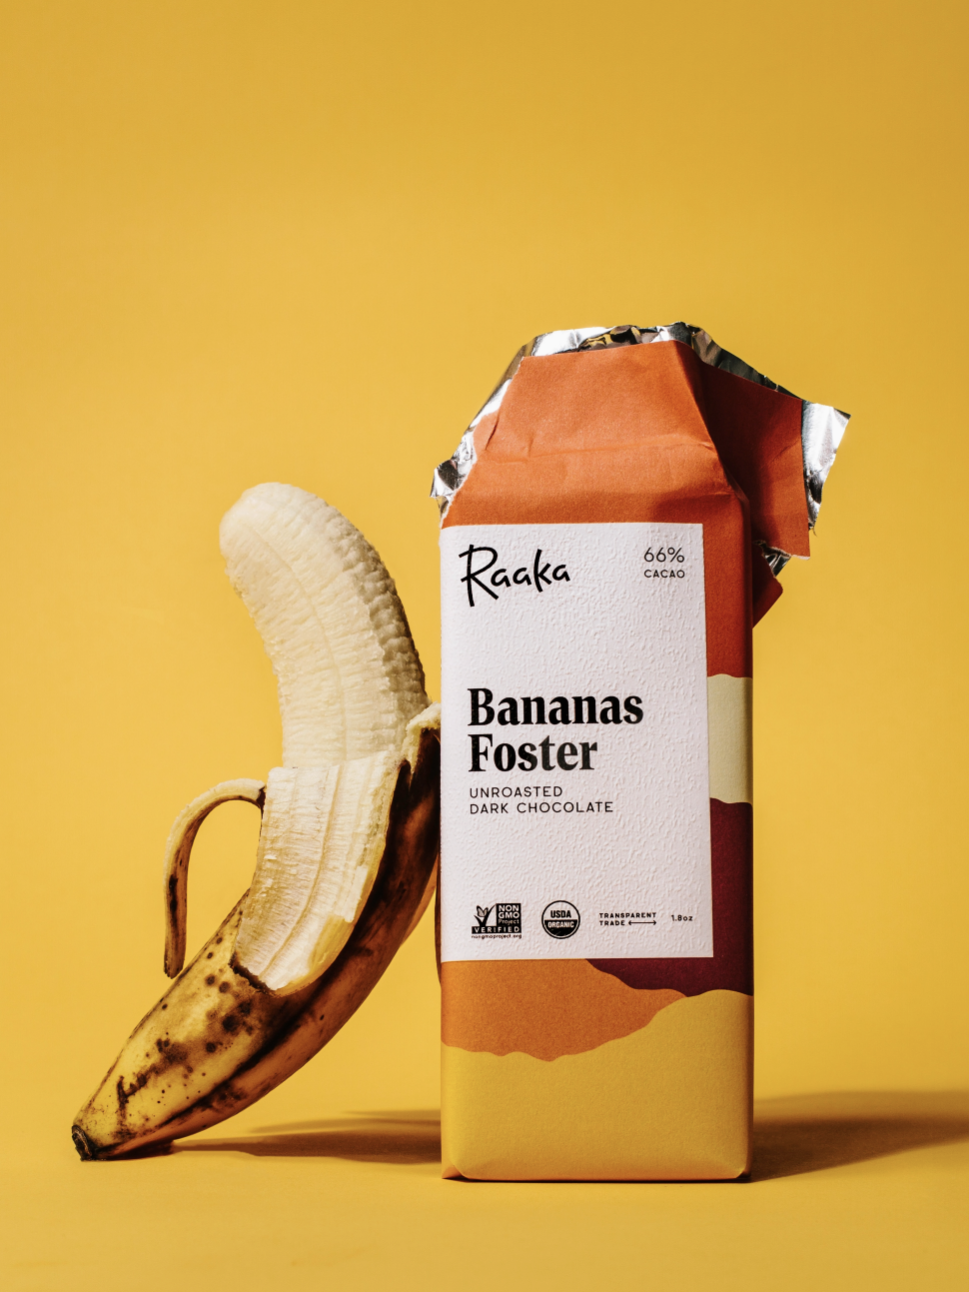 Bananas Foster Chocolate Bar